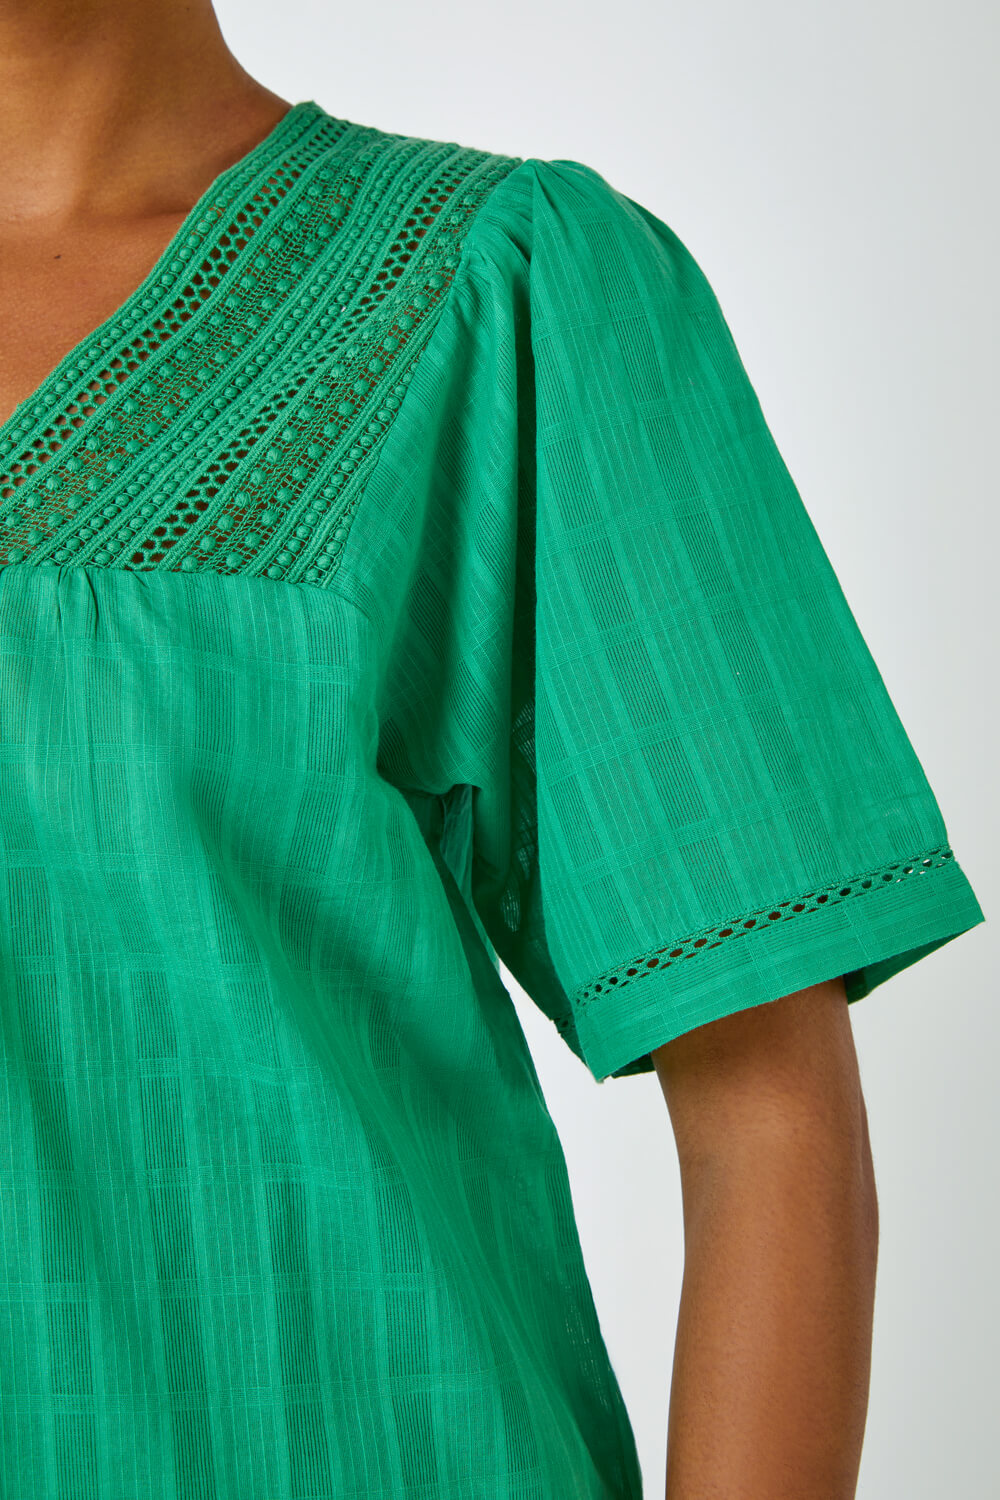 Emerald Lace Detail Cotton T-Shirt, Image 5 of 5